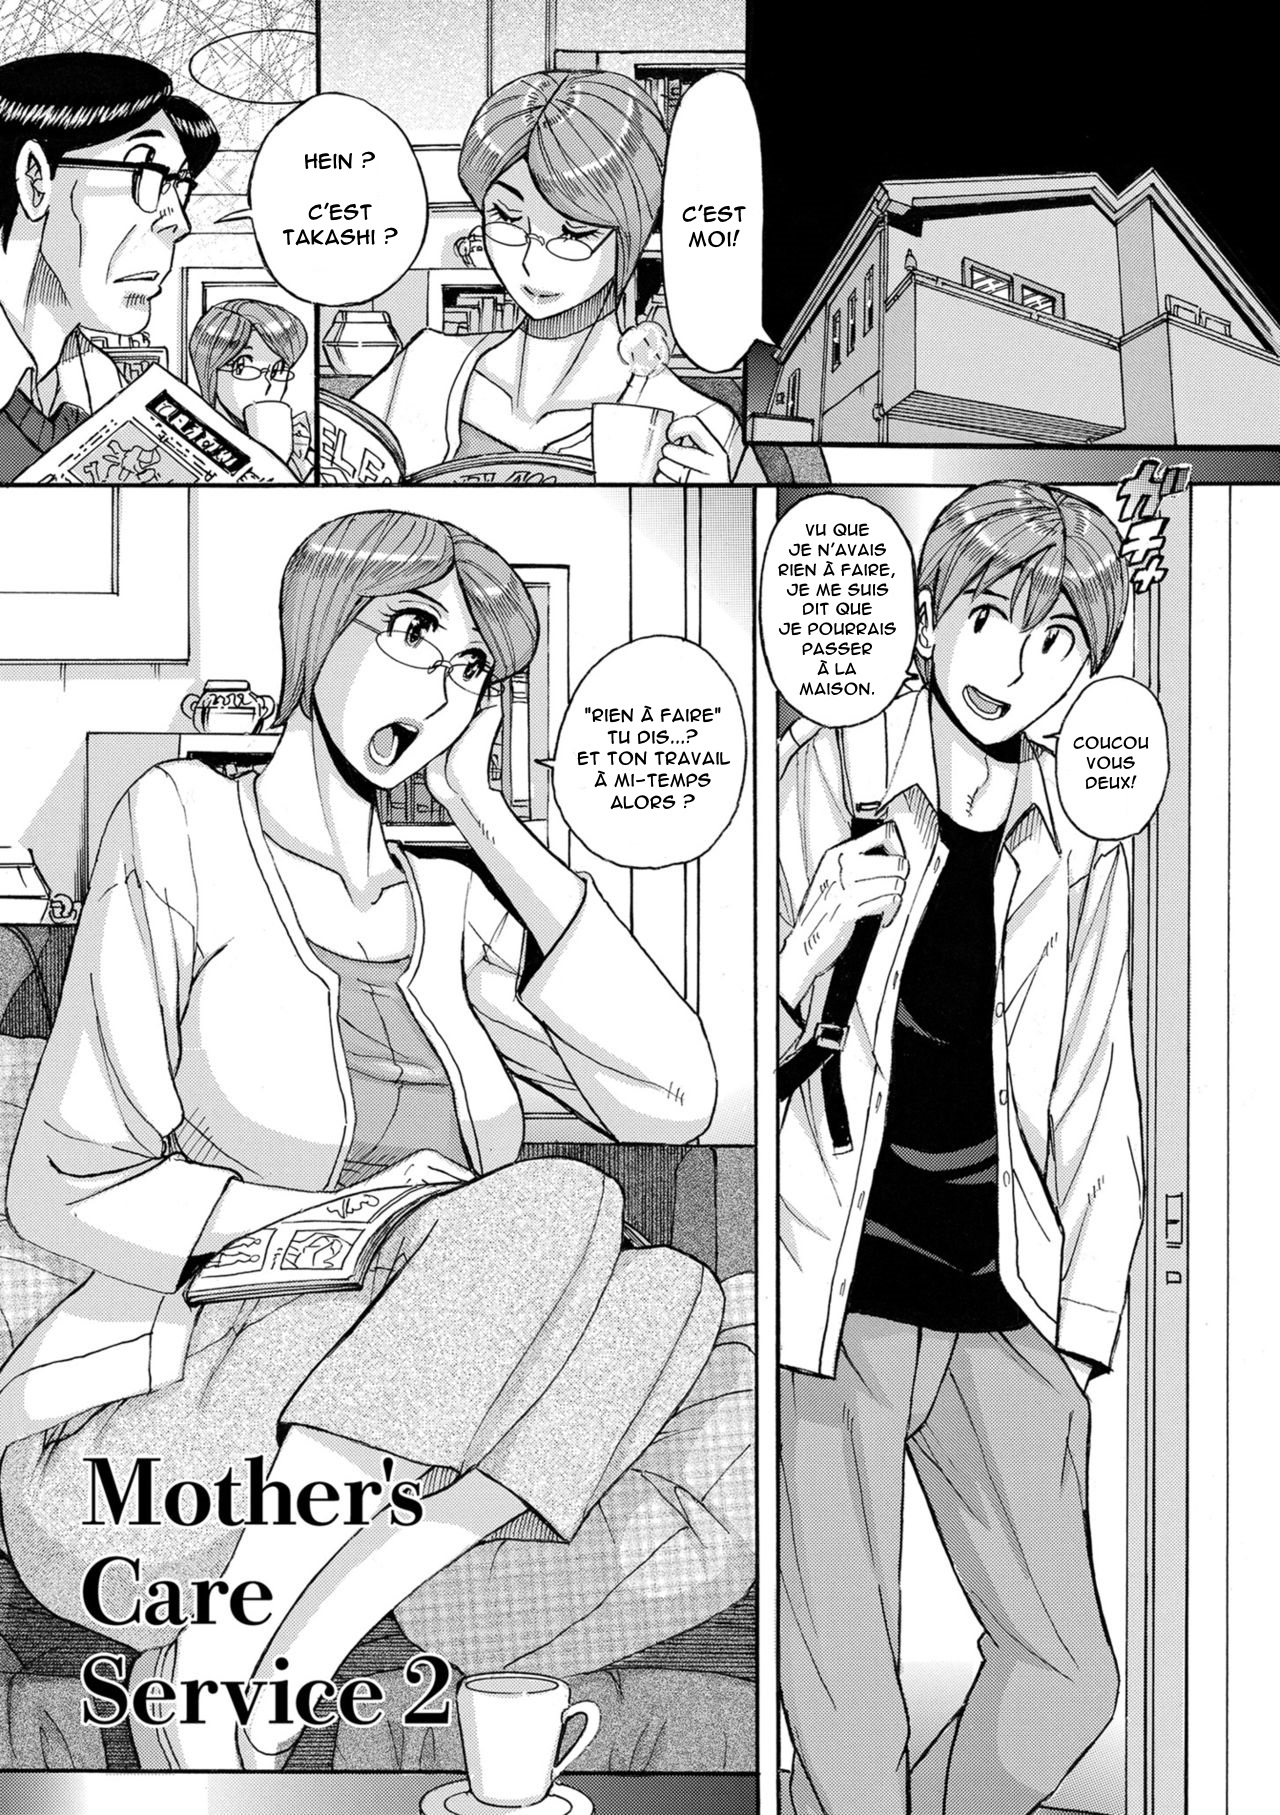 Mother’s Care Service numero d'image 27